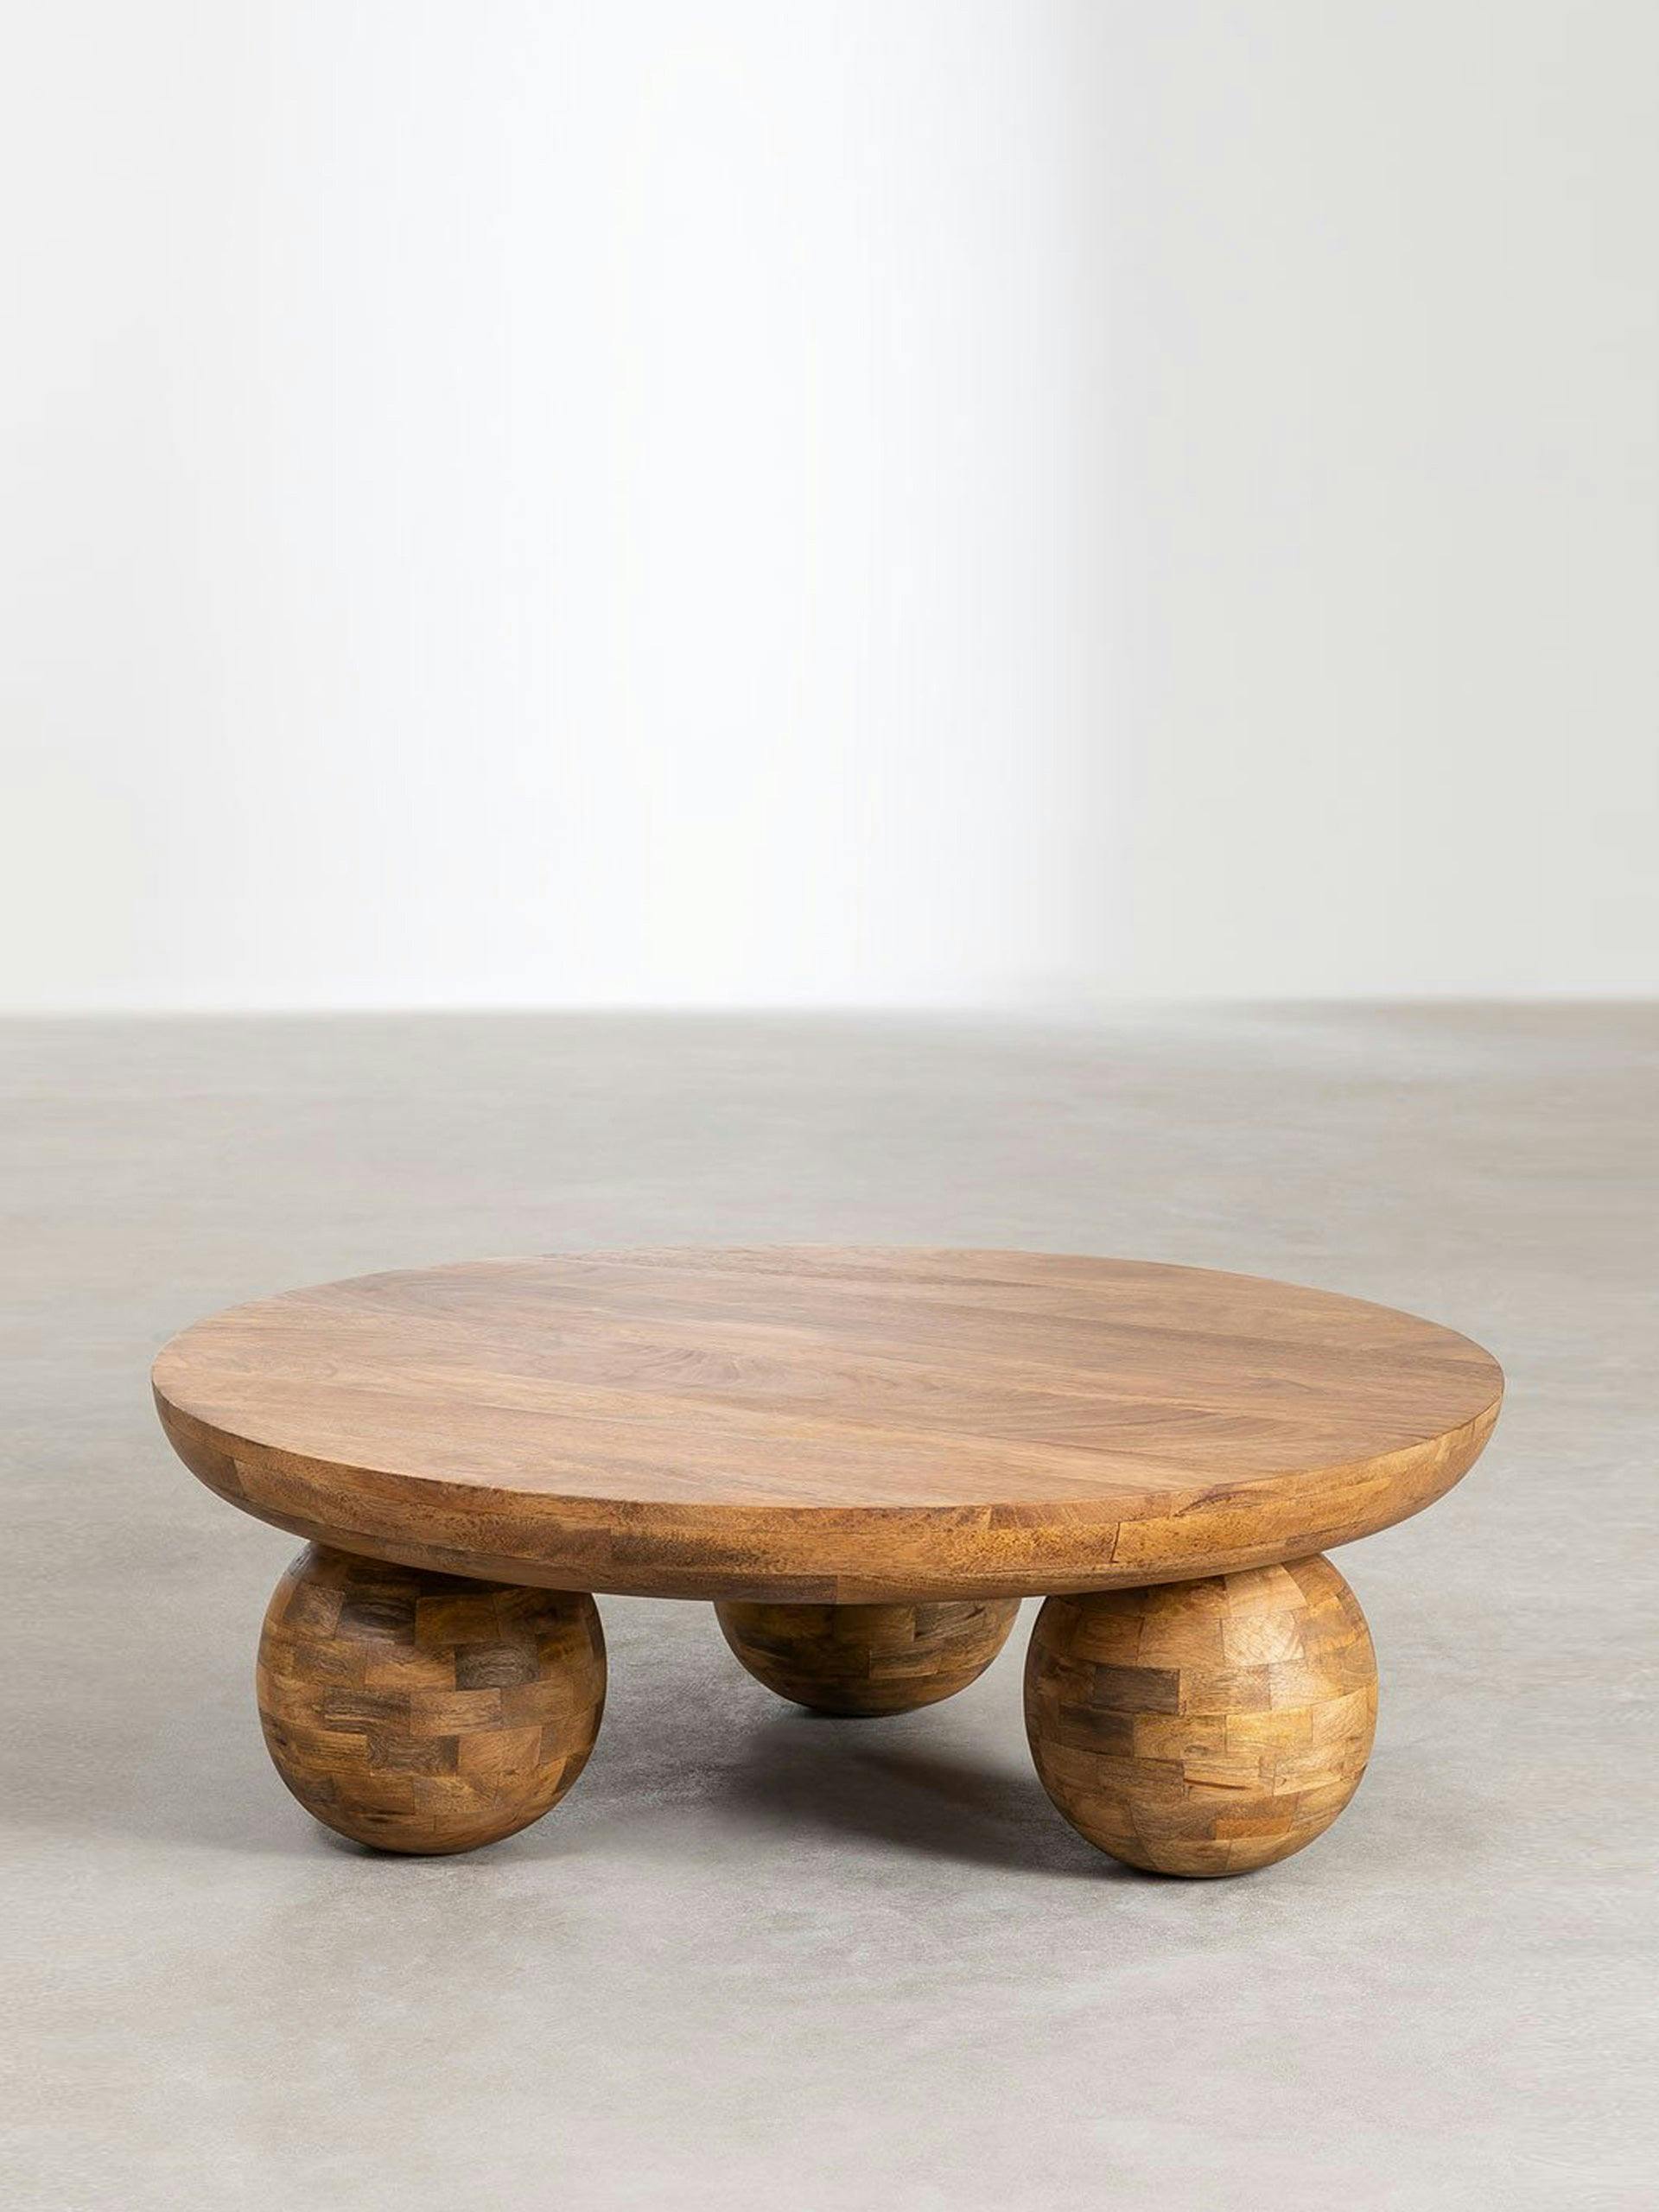 Mango wood round coffee table